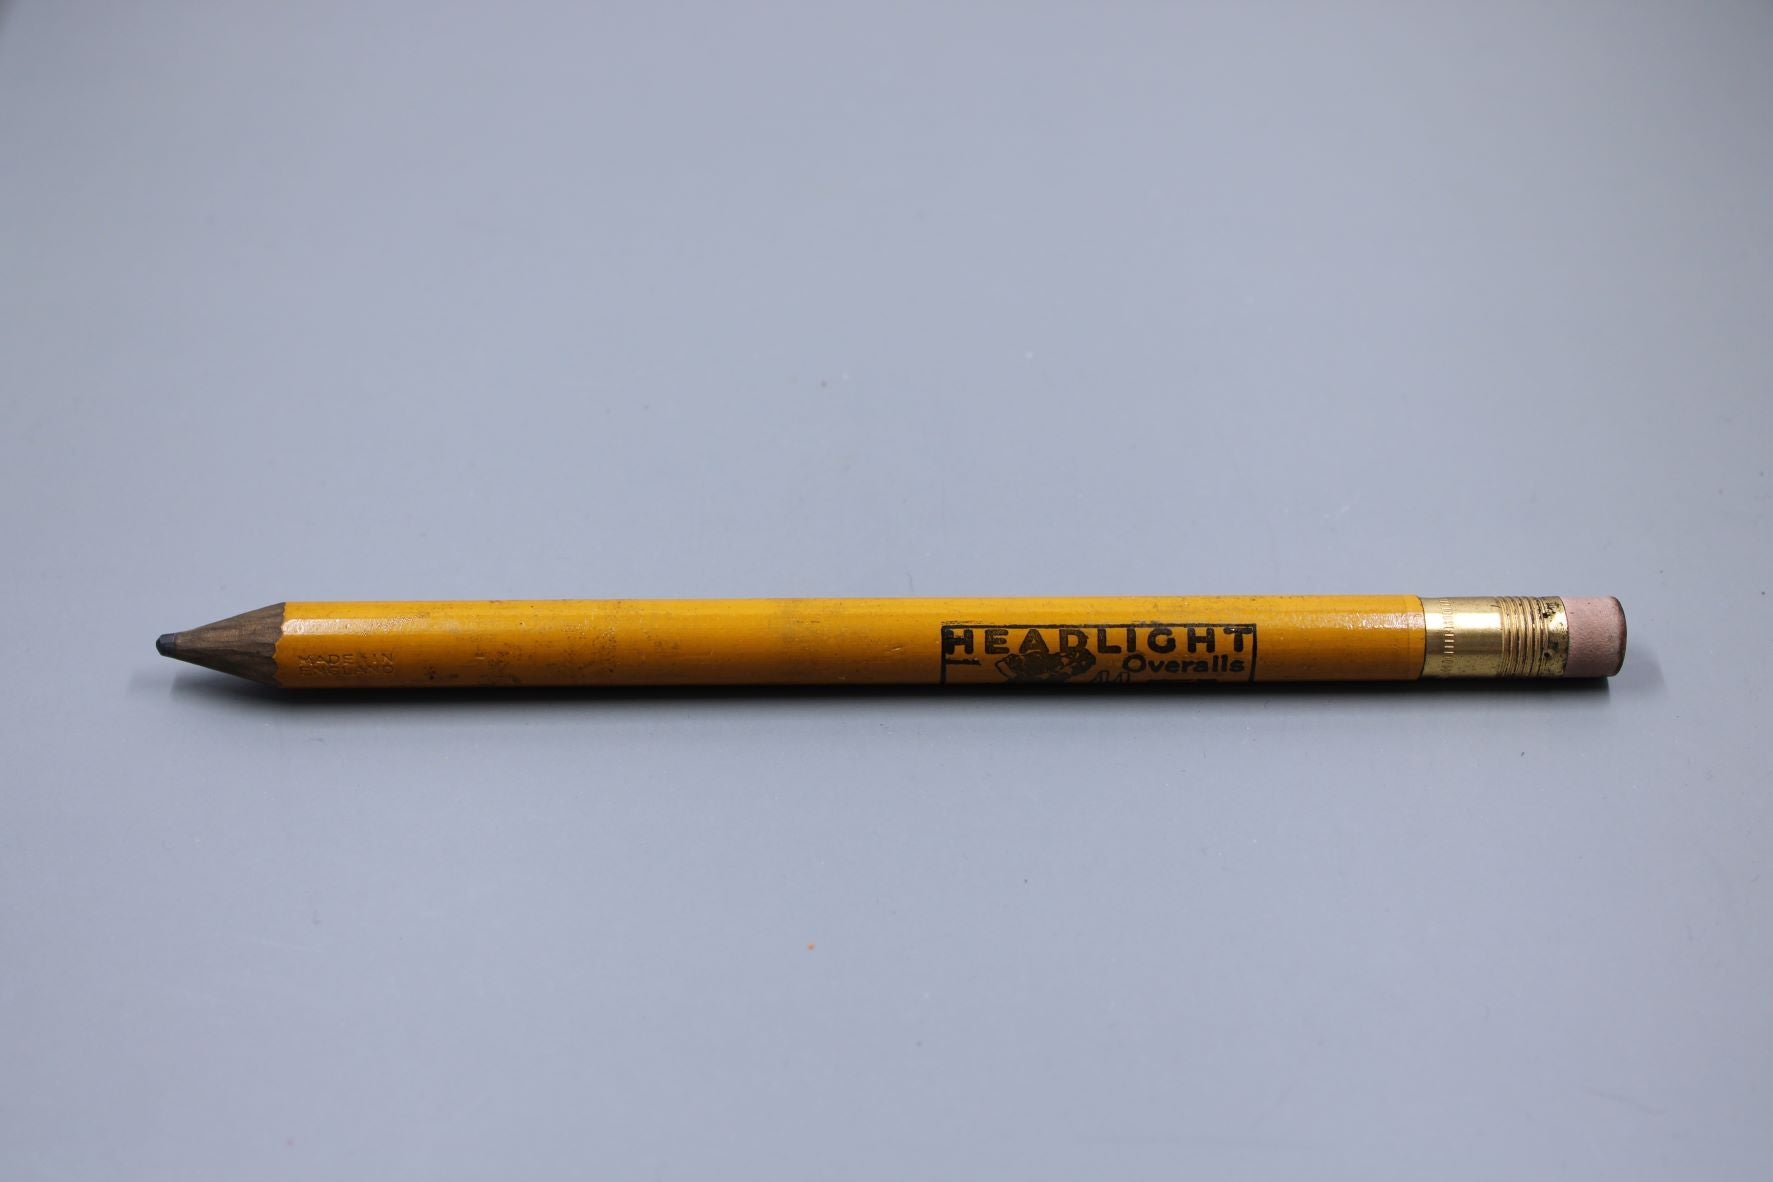 Vintage Advertising Pencil - Headlight Overalls